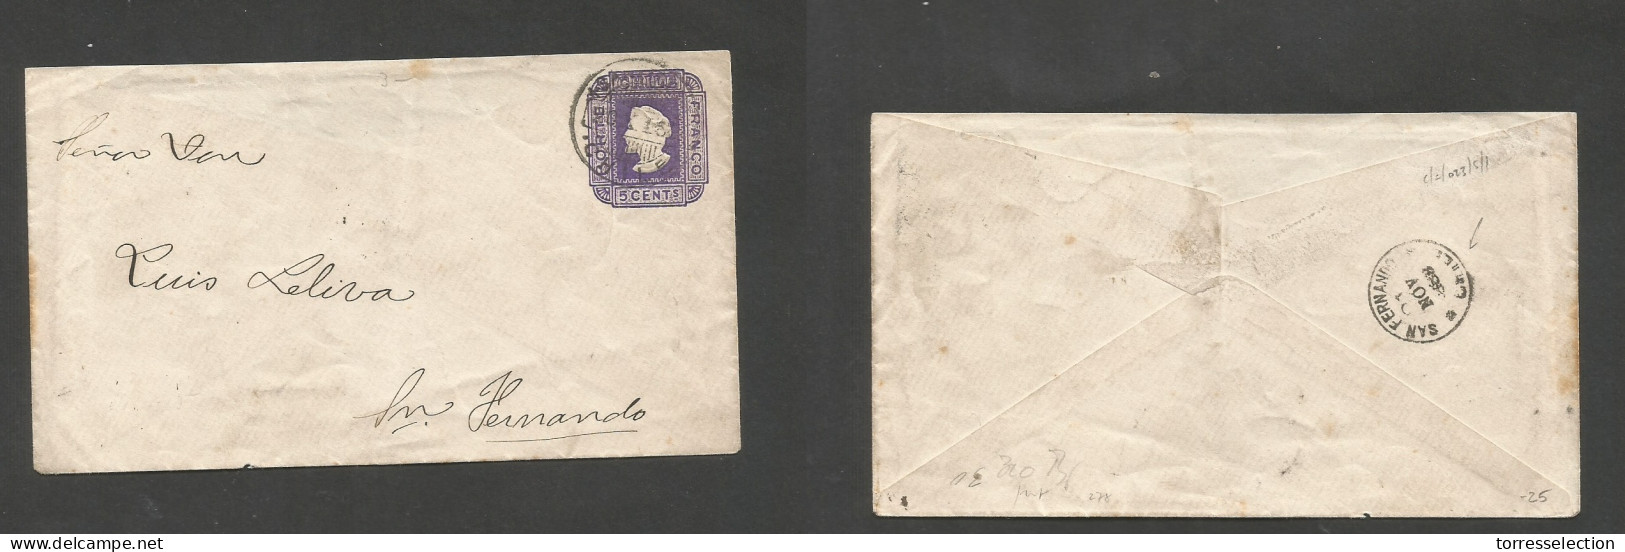 CHILE - Stationery. 1889 (20 Nov) Stgo - San Fernando (24 Nov) 5c Purple Stat Envelope, Paper With Watermark Lines At 20 - Chile